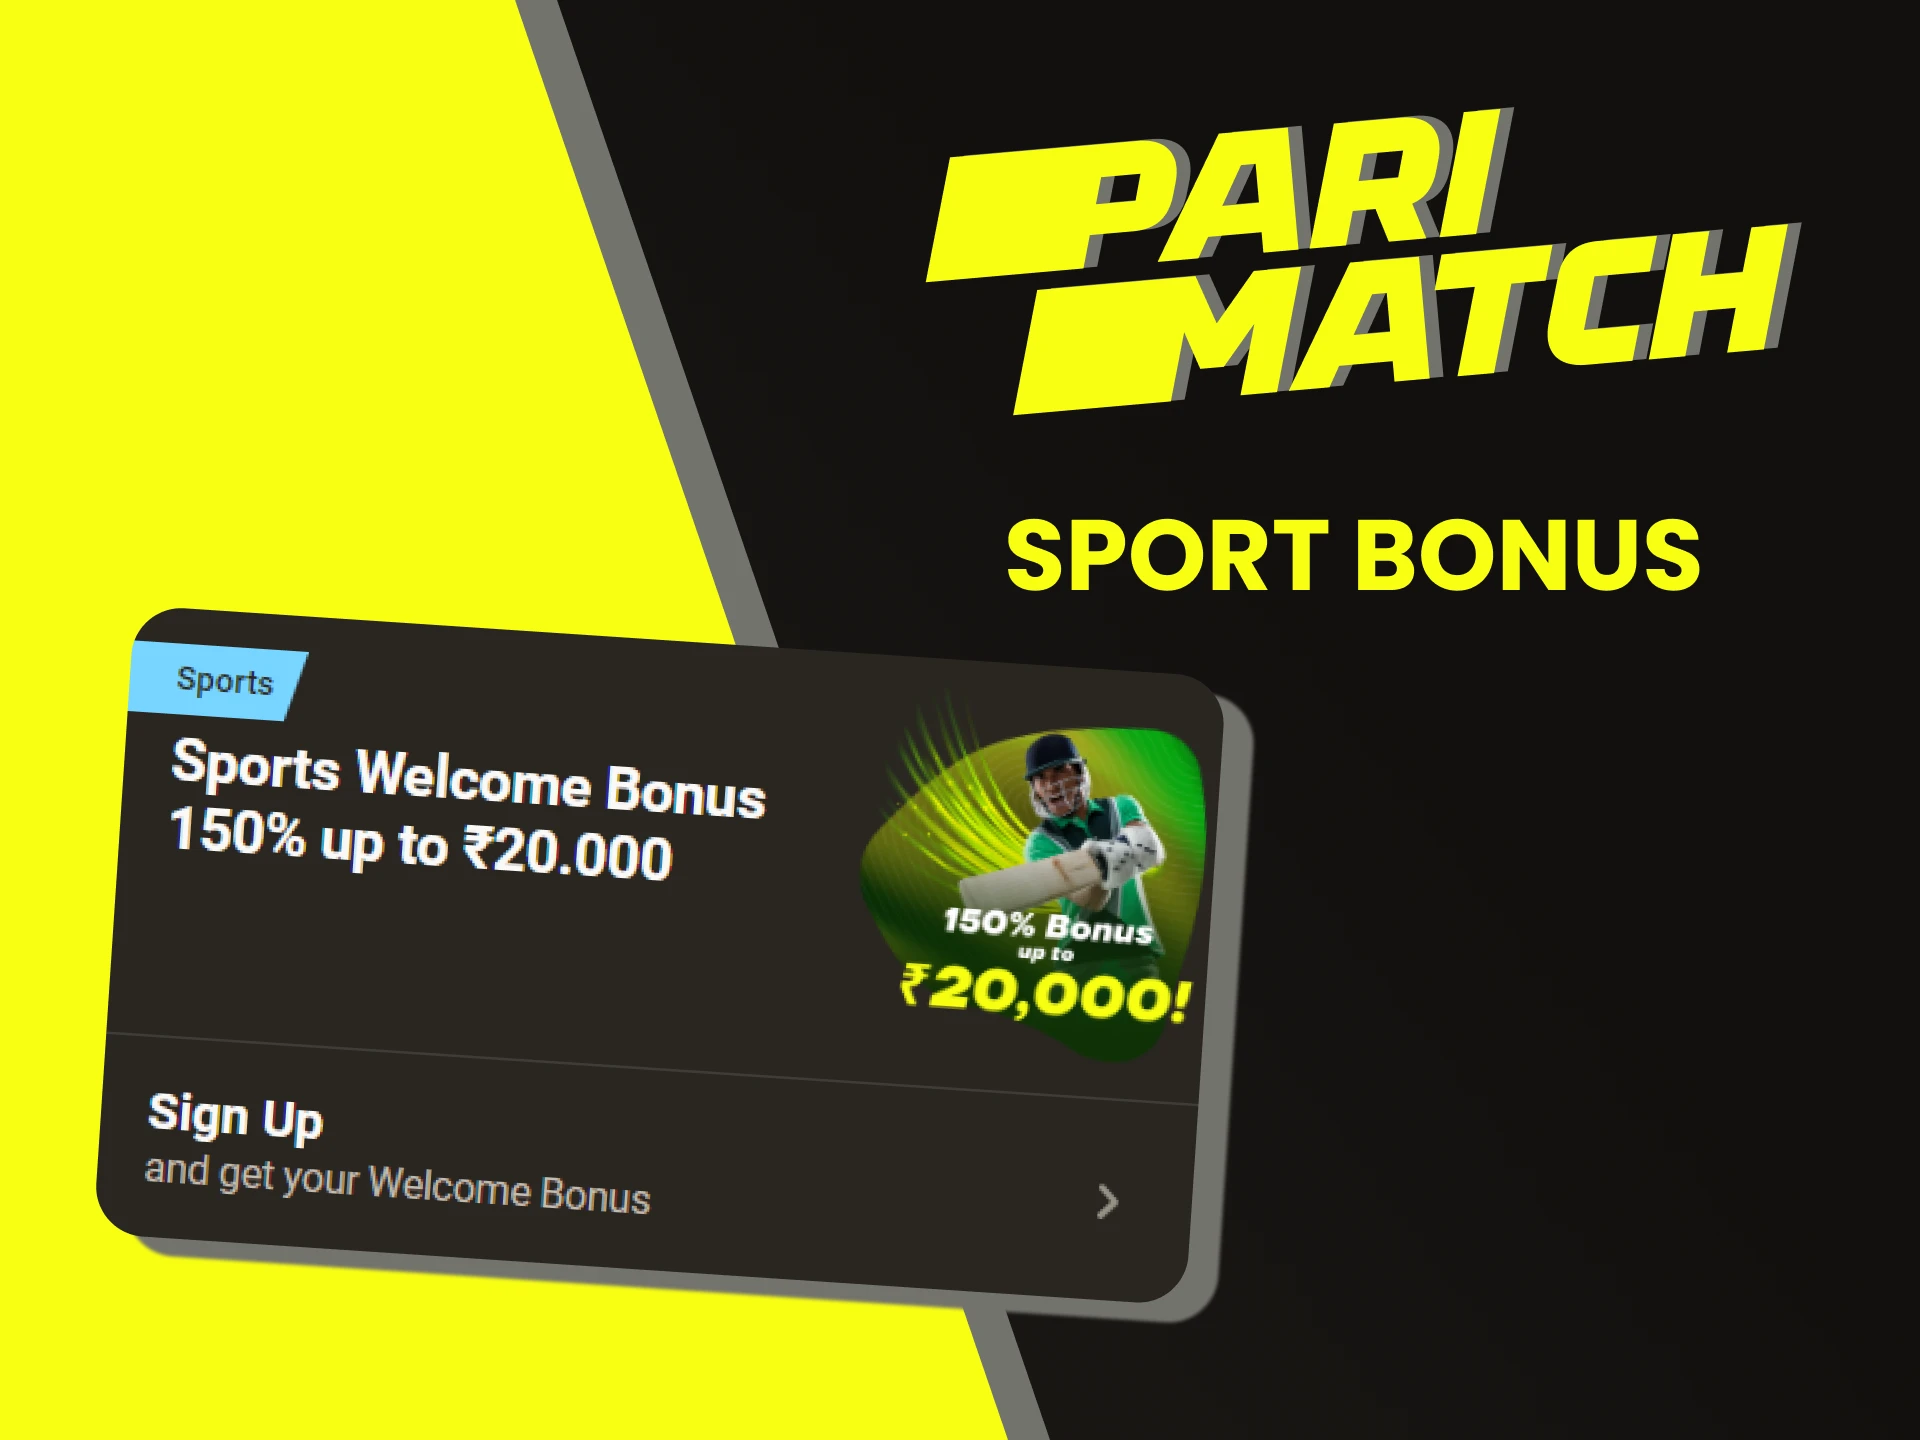 Parimatch has a welcome bonus for sports.